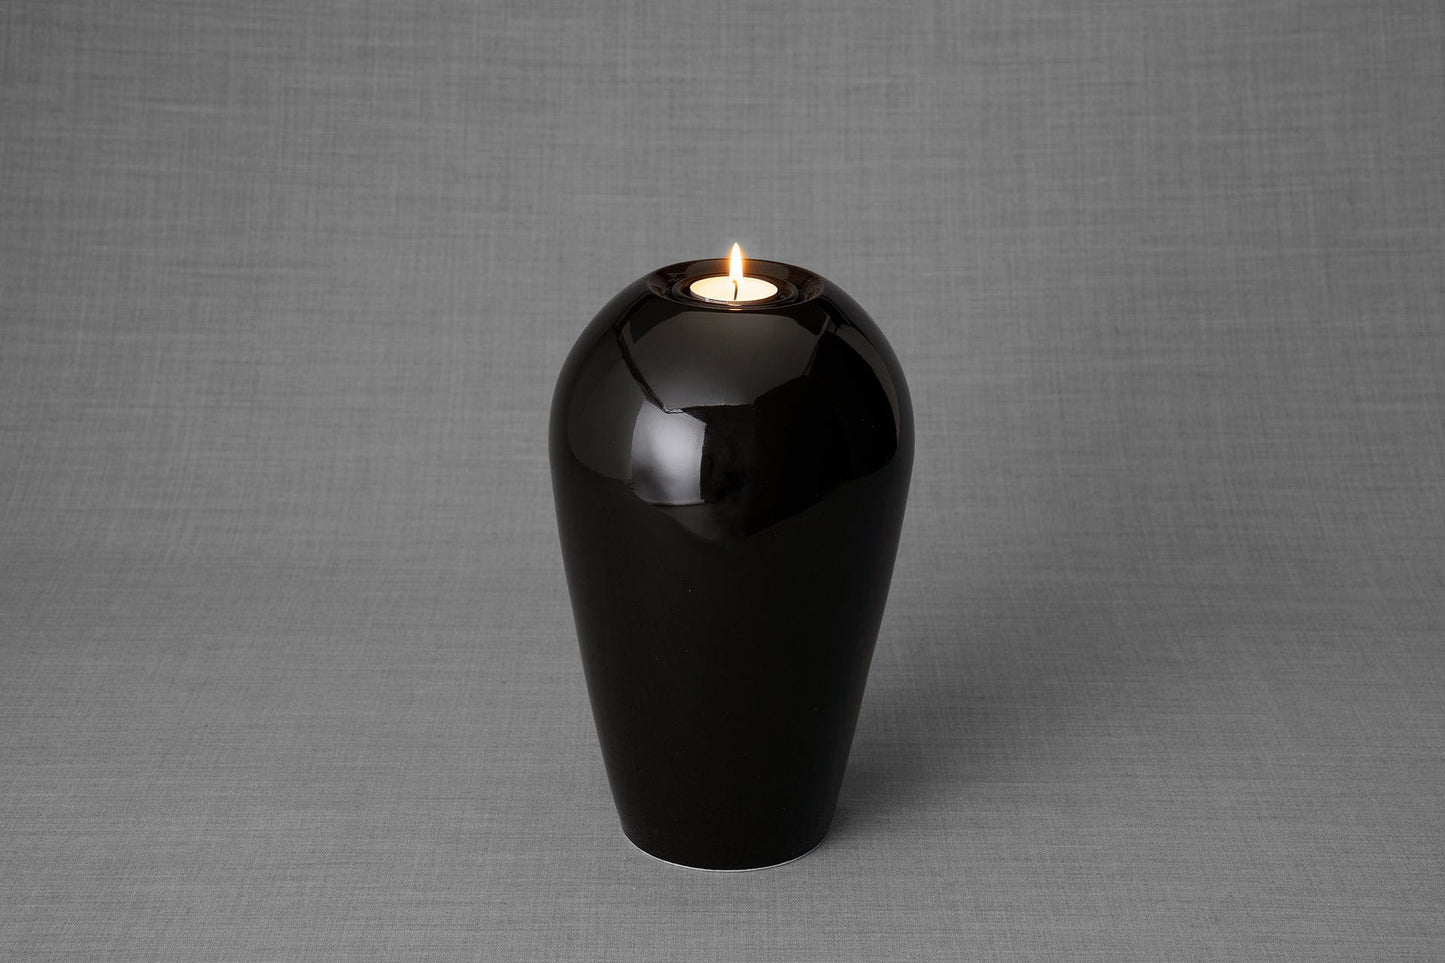 Pulvis Art Urns Adult Size Urn Memorial Cremation Urn "Serenity" - Large | Lamp Black | Ceramic